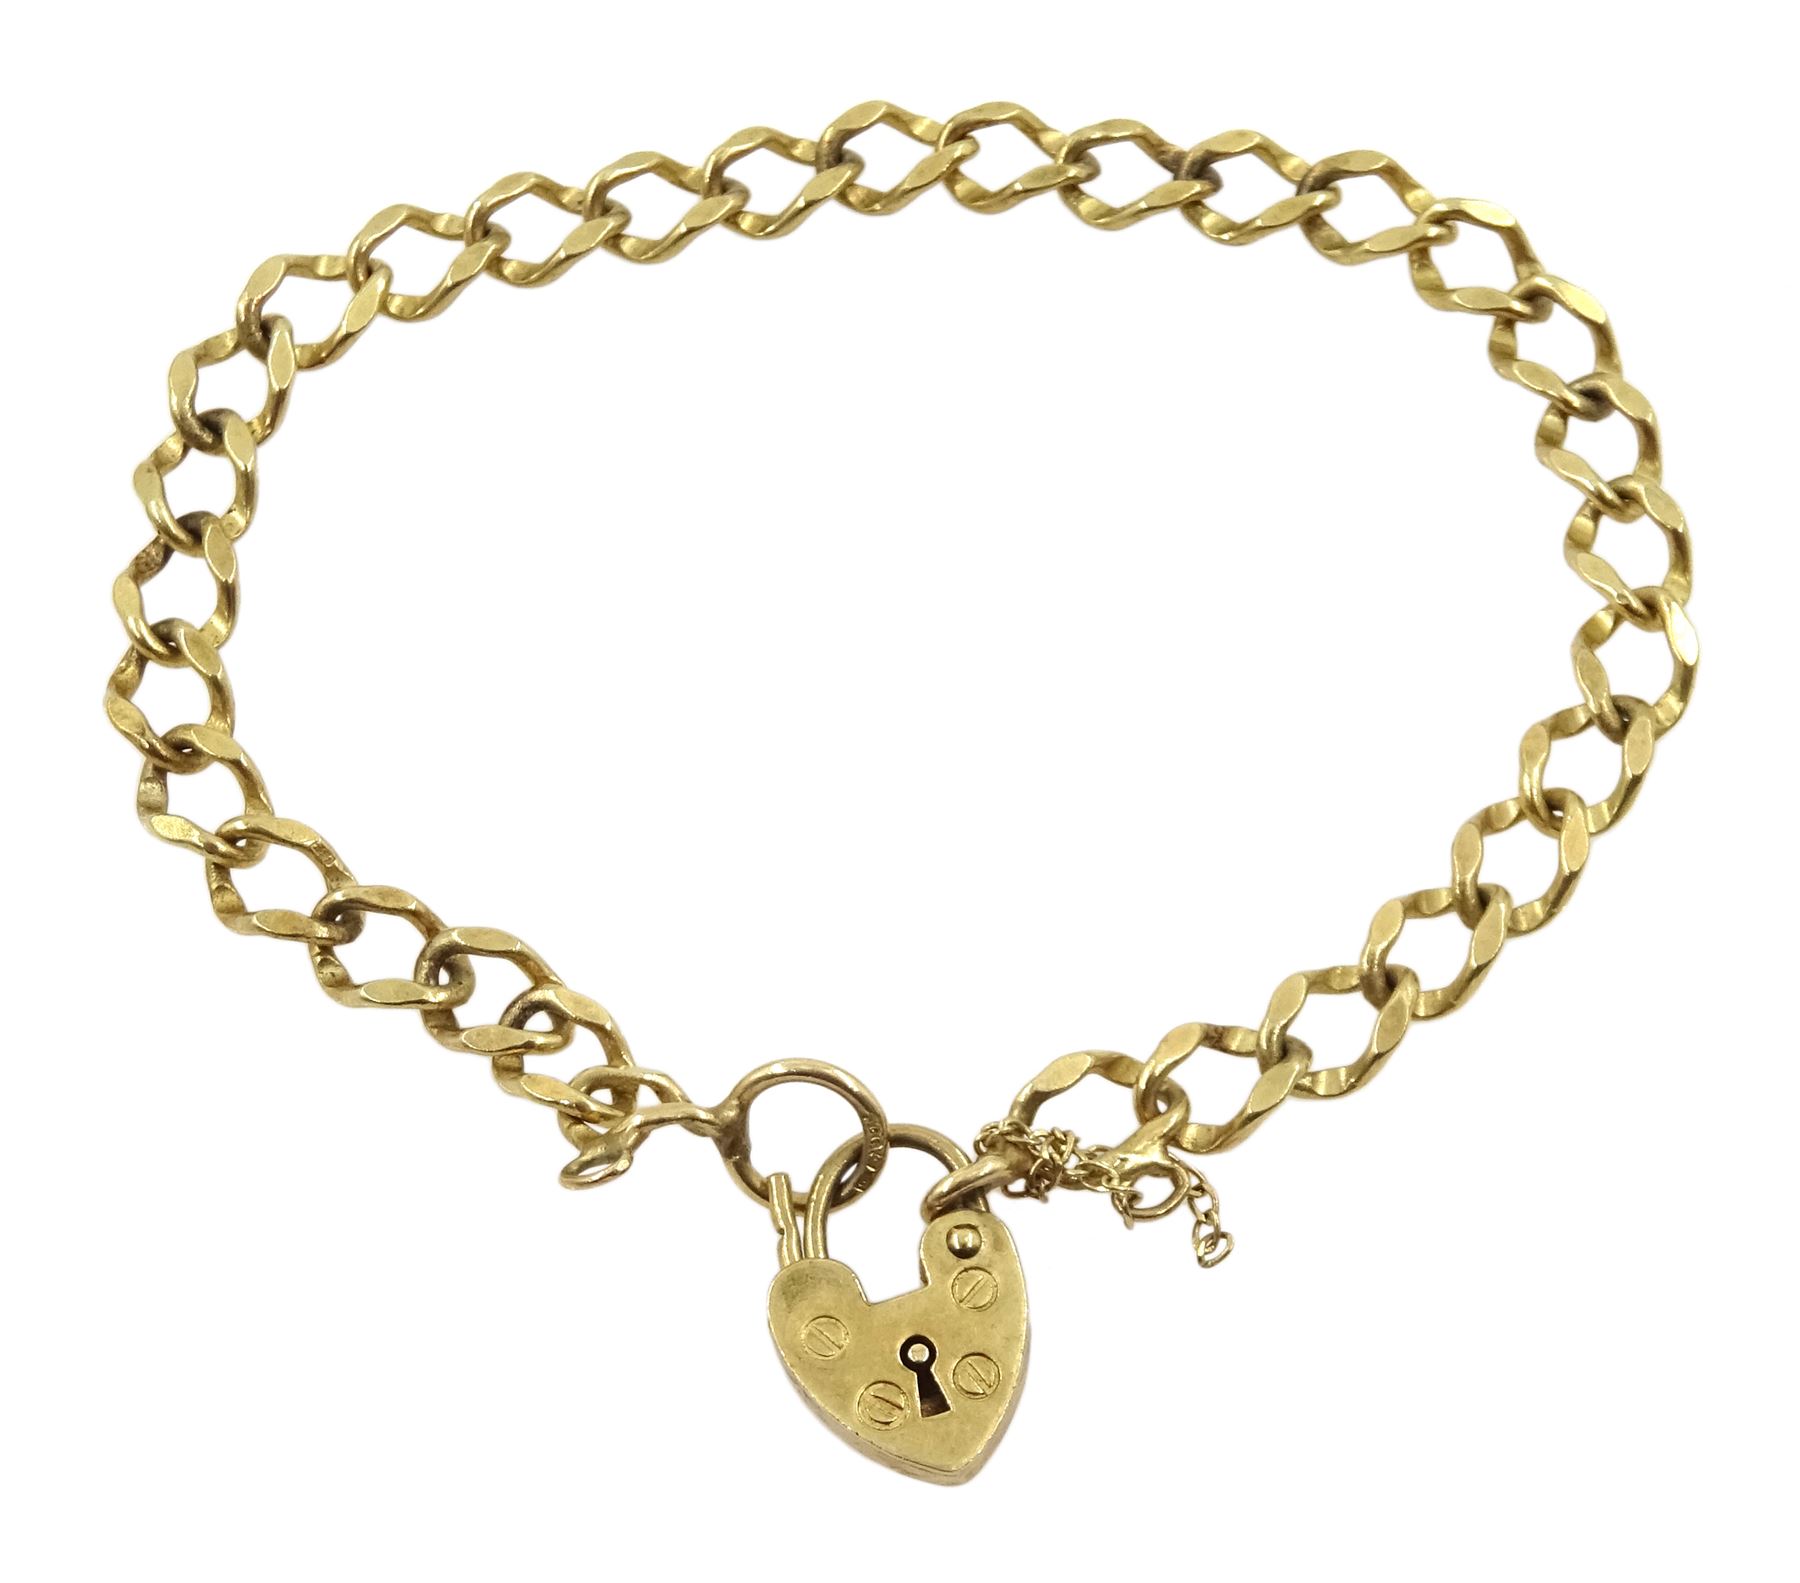 9ct gold fattened link bracelet with heart locket